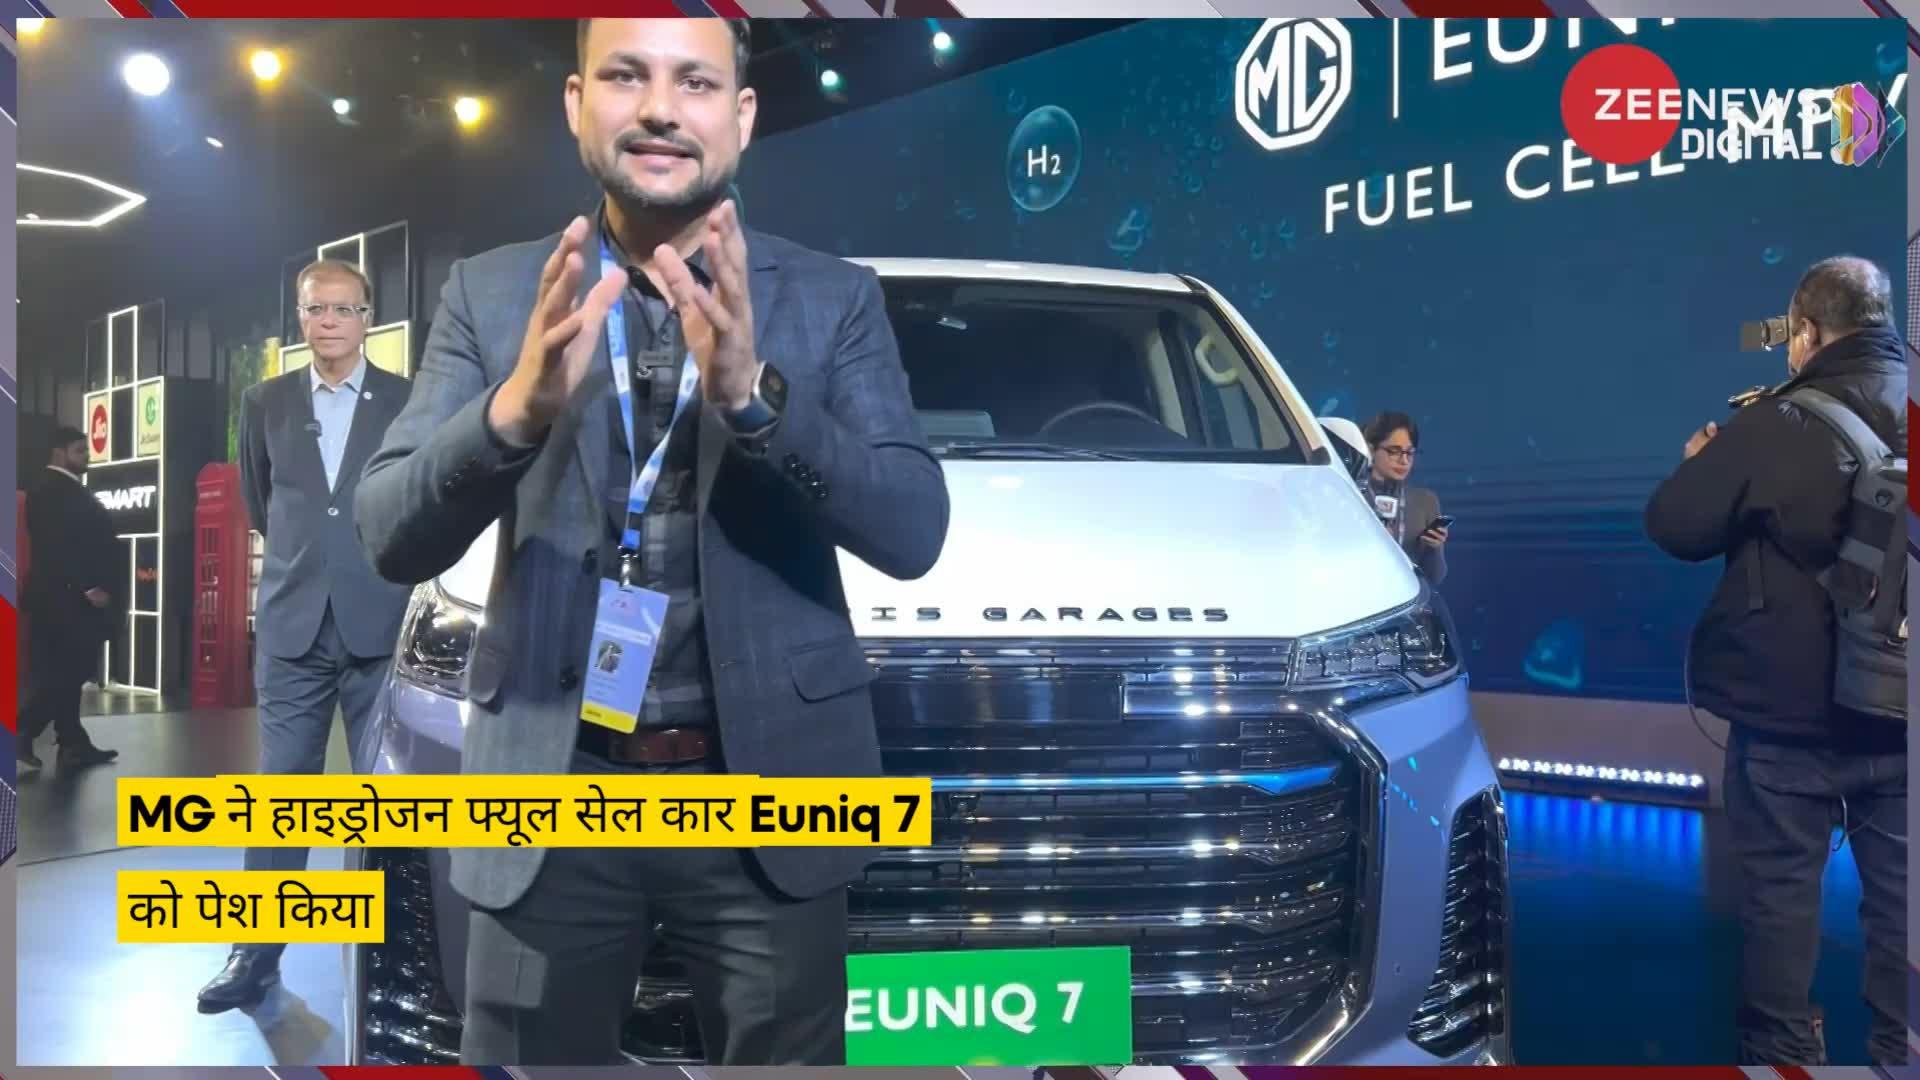 Euniq 7: MG लाई पहली हाइड्रोजन कार, फुल चार्ज में 600km चलेगी